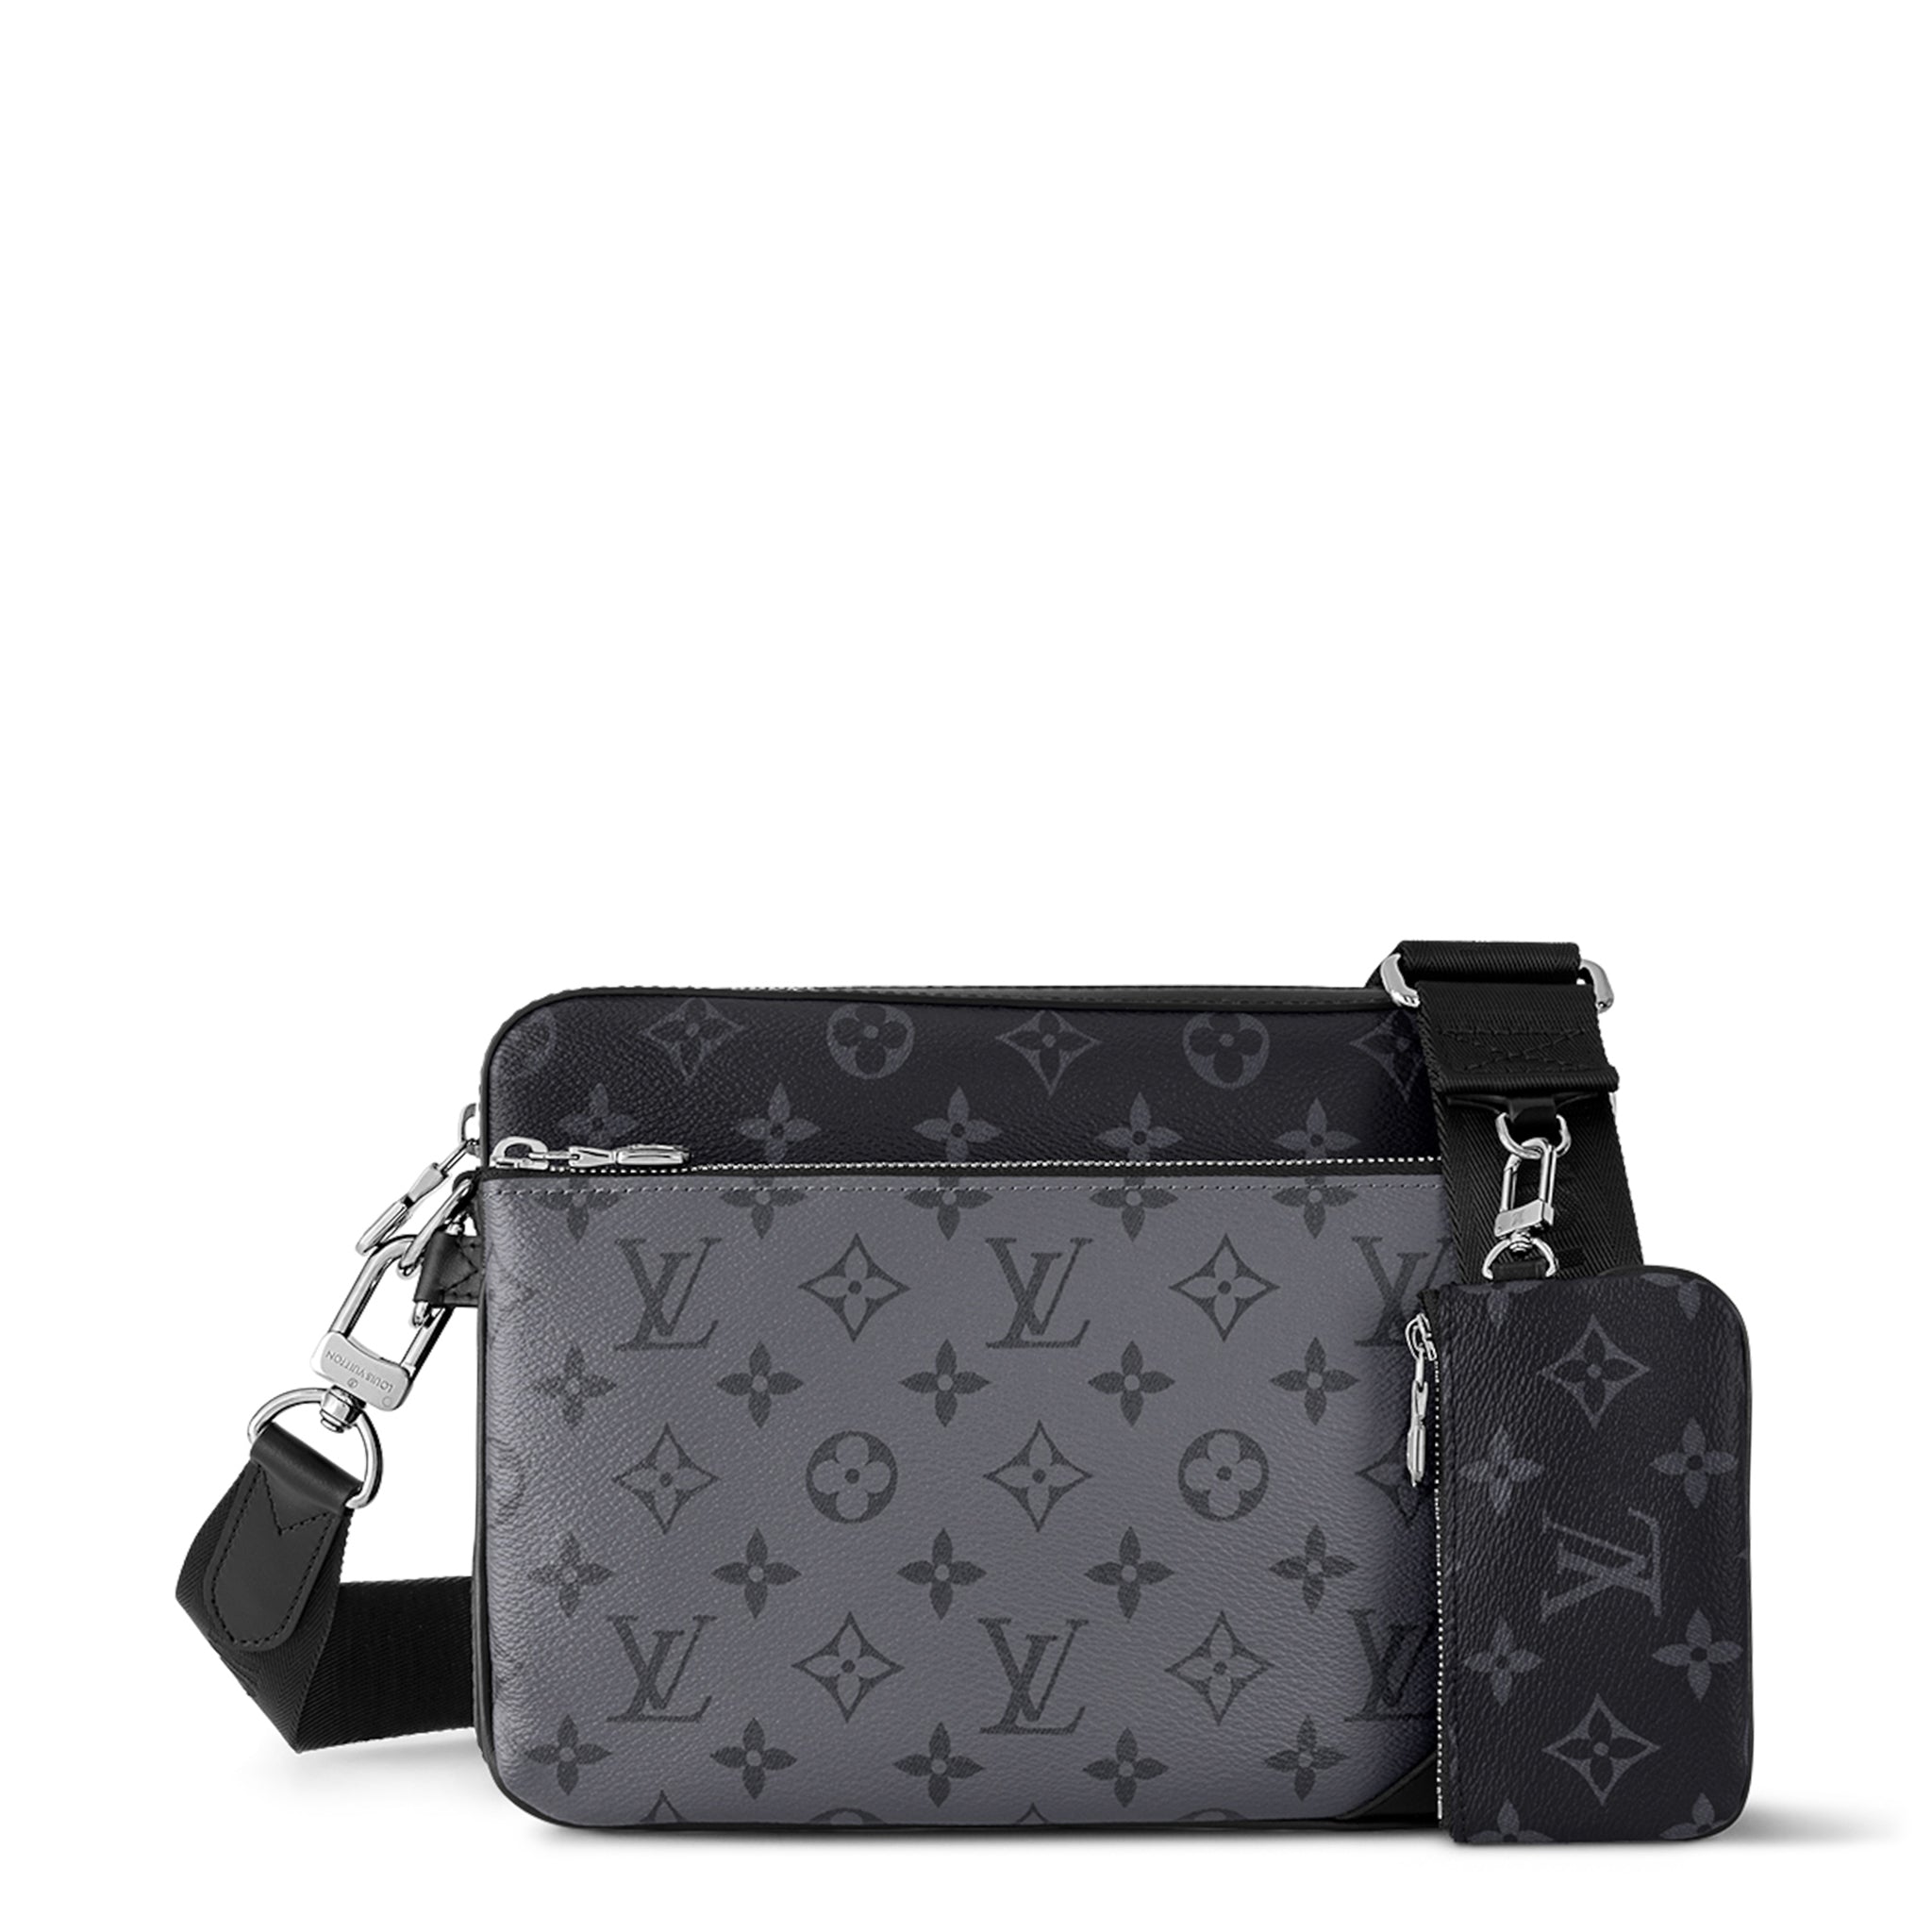 Front view of Louis Vuitton Monogram Trio Messenger Bag Black Grey NVPROD2320039V